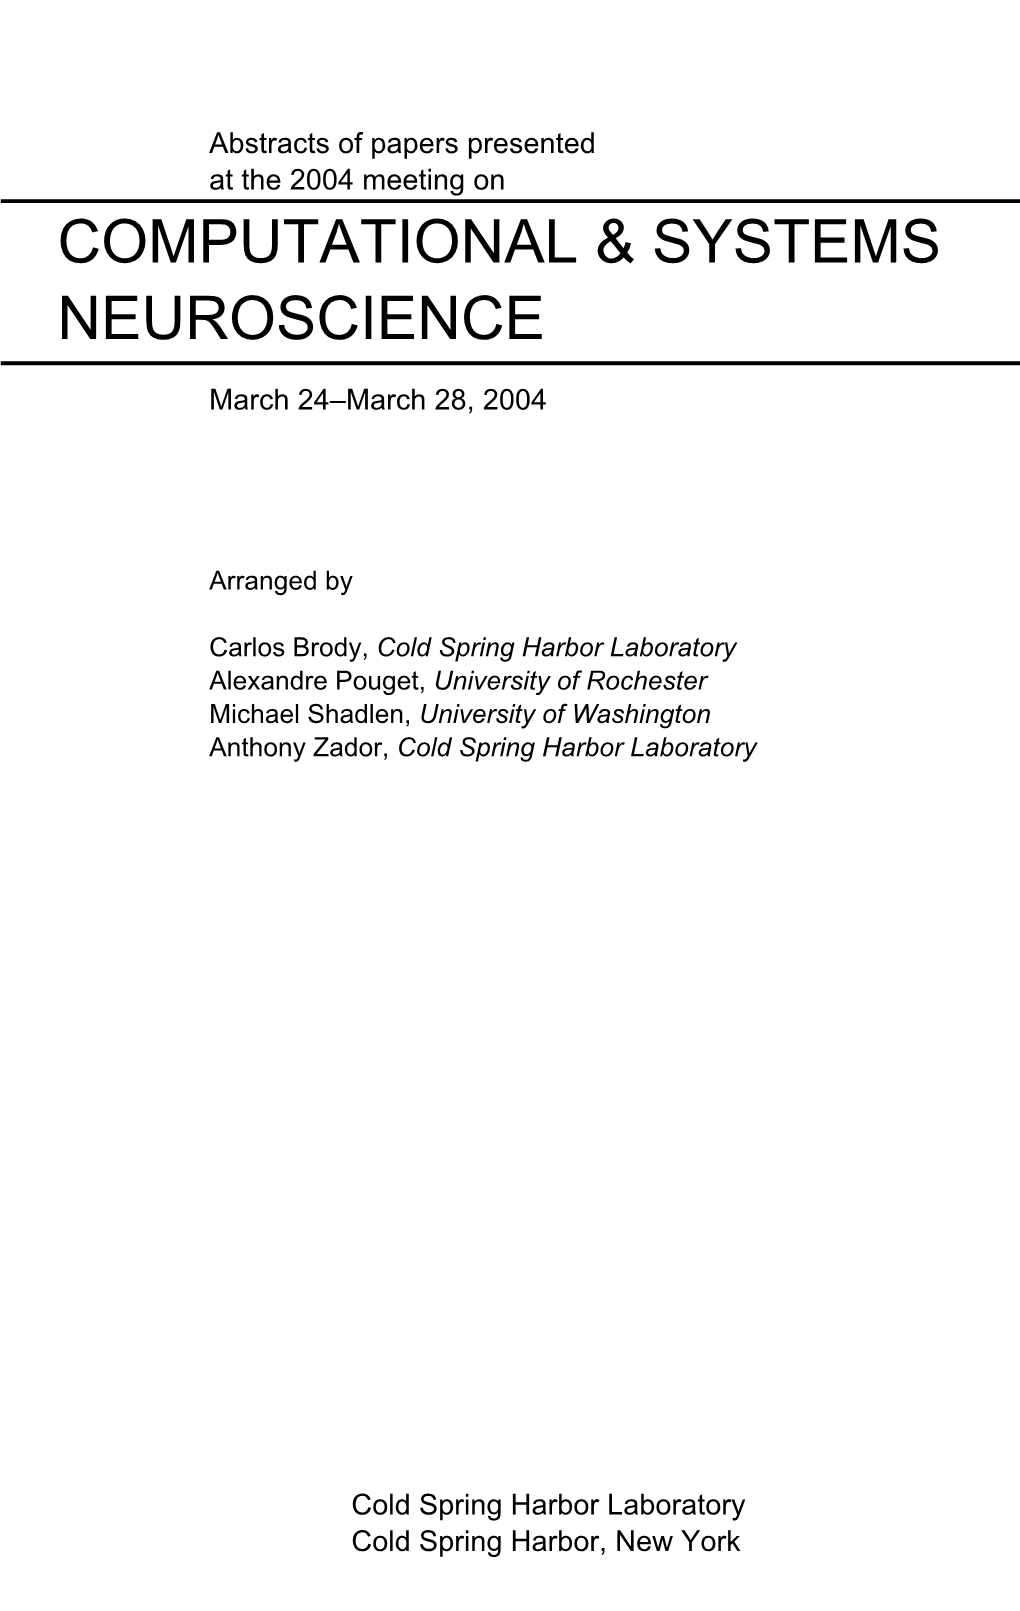 Computational & Systems Neuroscience